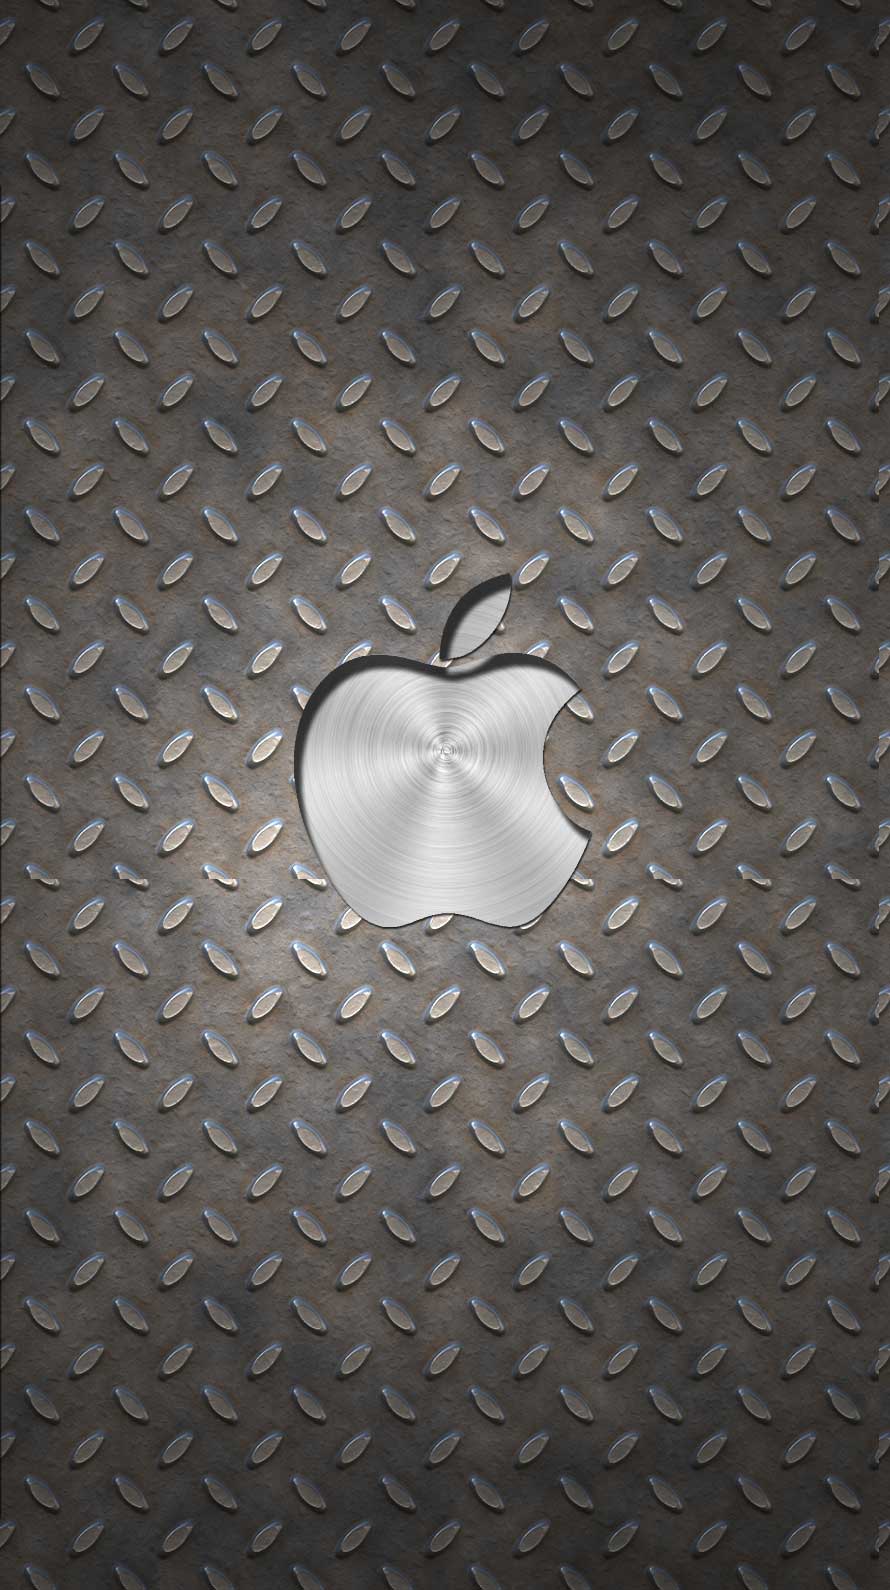 Iphone用 錆た金属とメタルで廃工場風のオリジナル壁紙 Appleマーク入り Laboホンテン